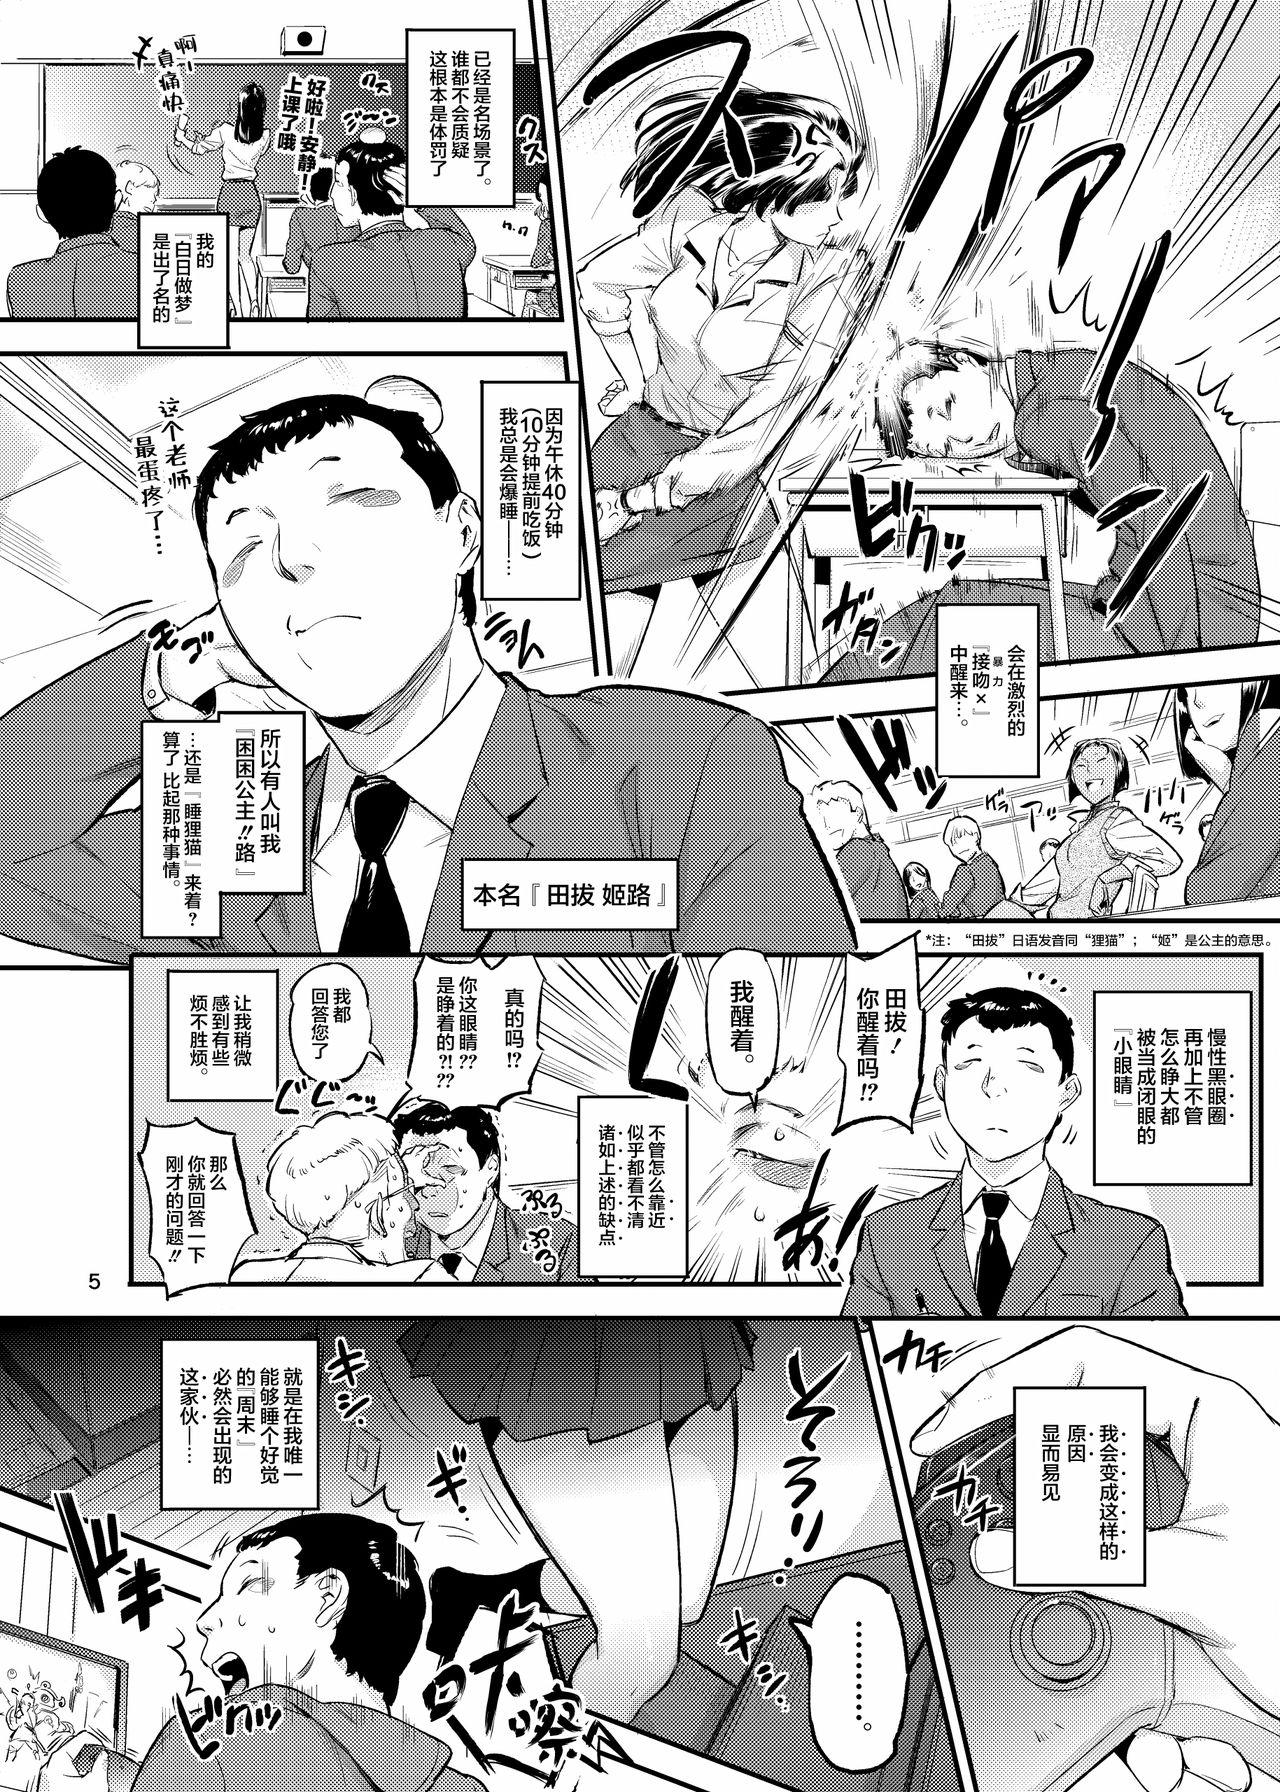 Gang Yodare Mitsuba! - Original Trap - Page 5